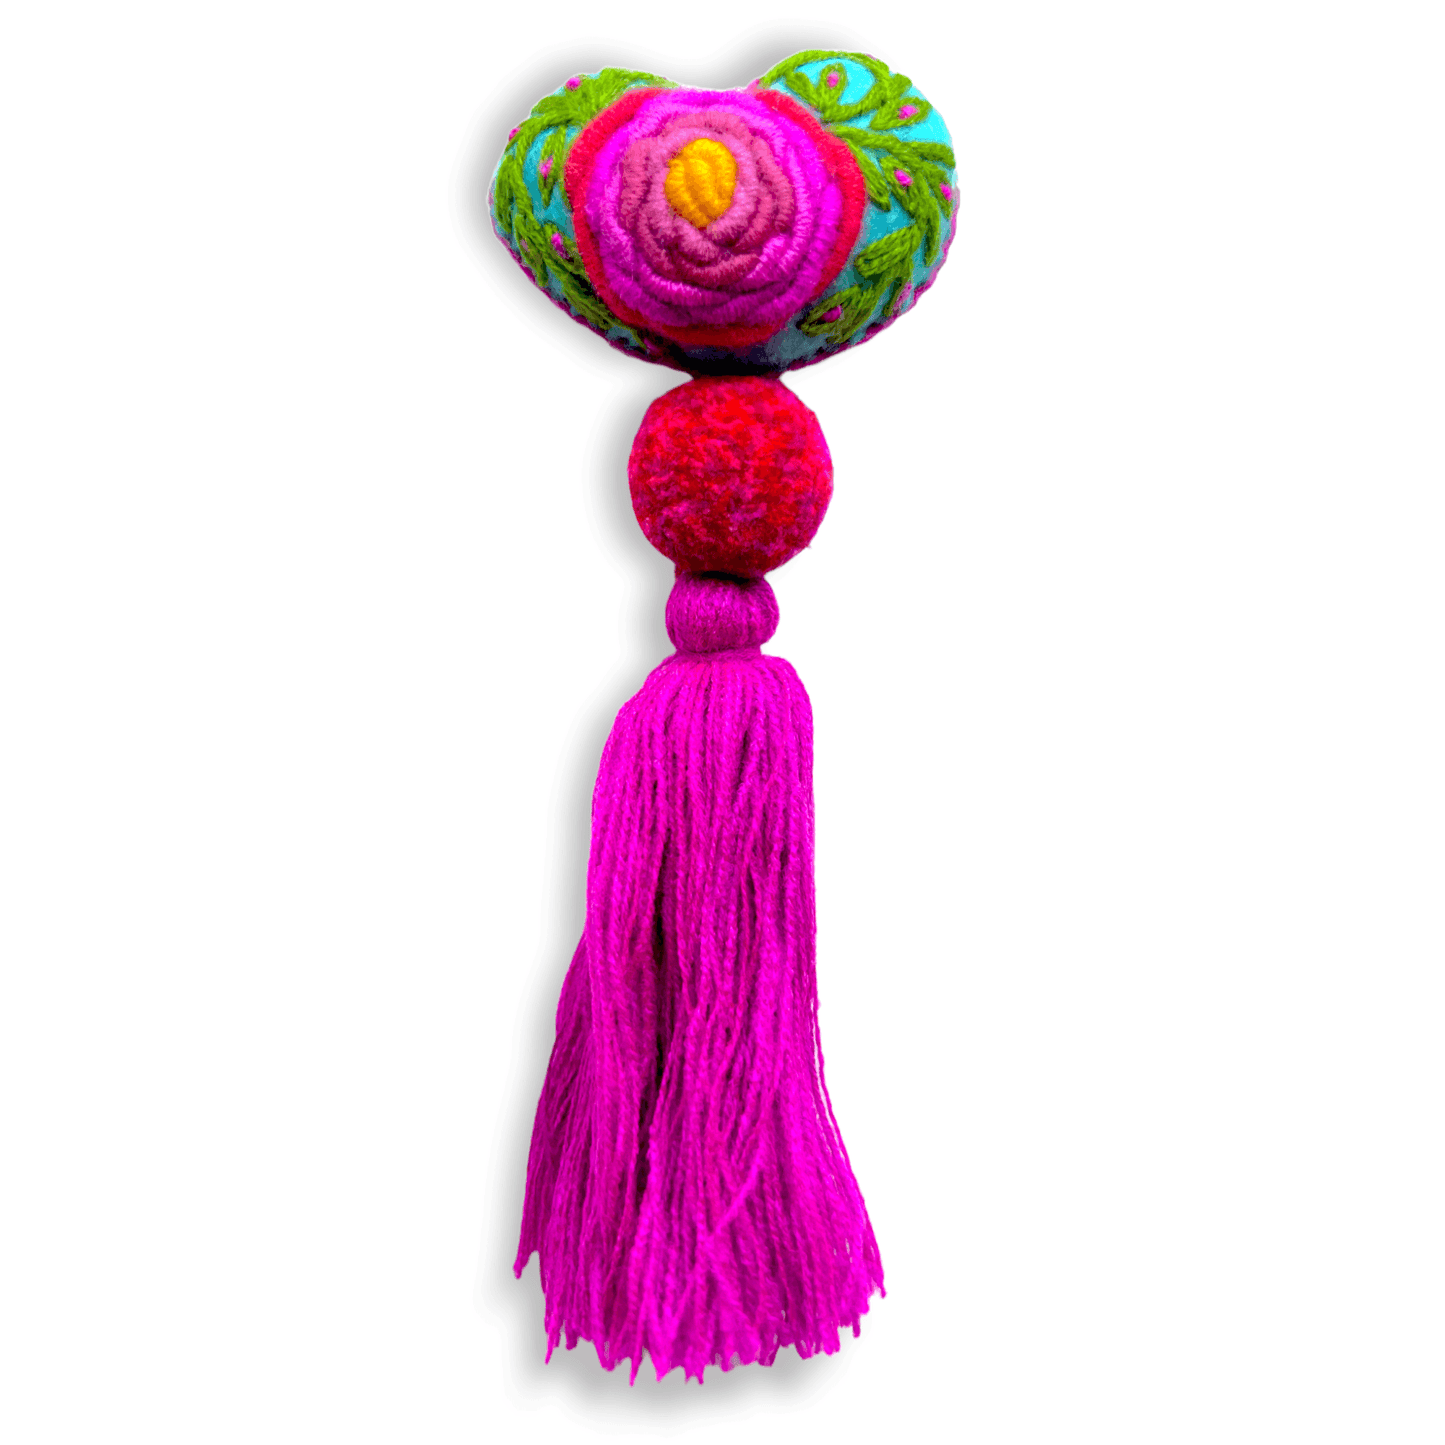 Floral door tassel made of fabric with bold colors - Sundara Joon